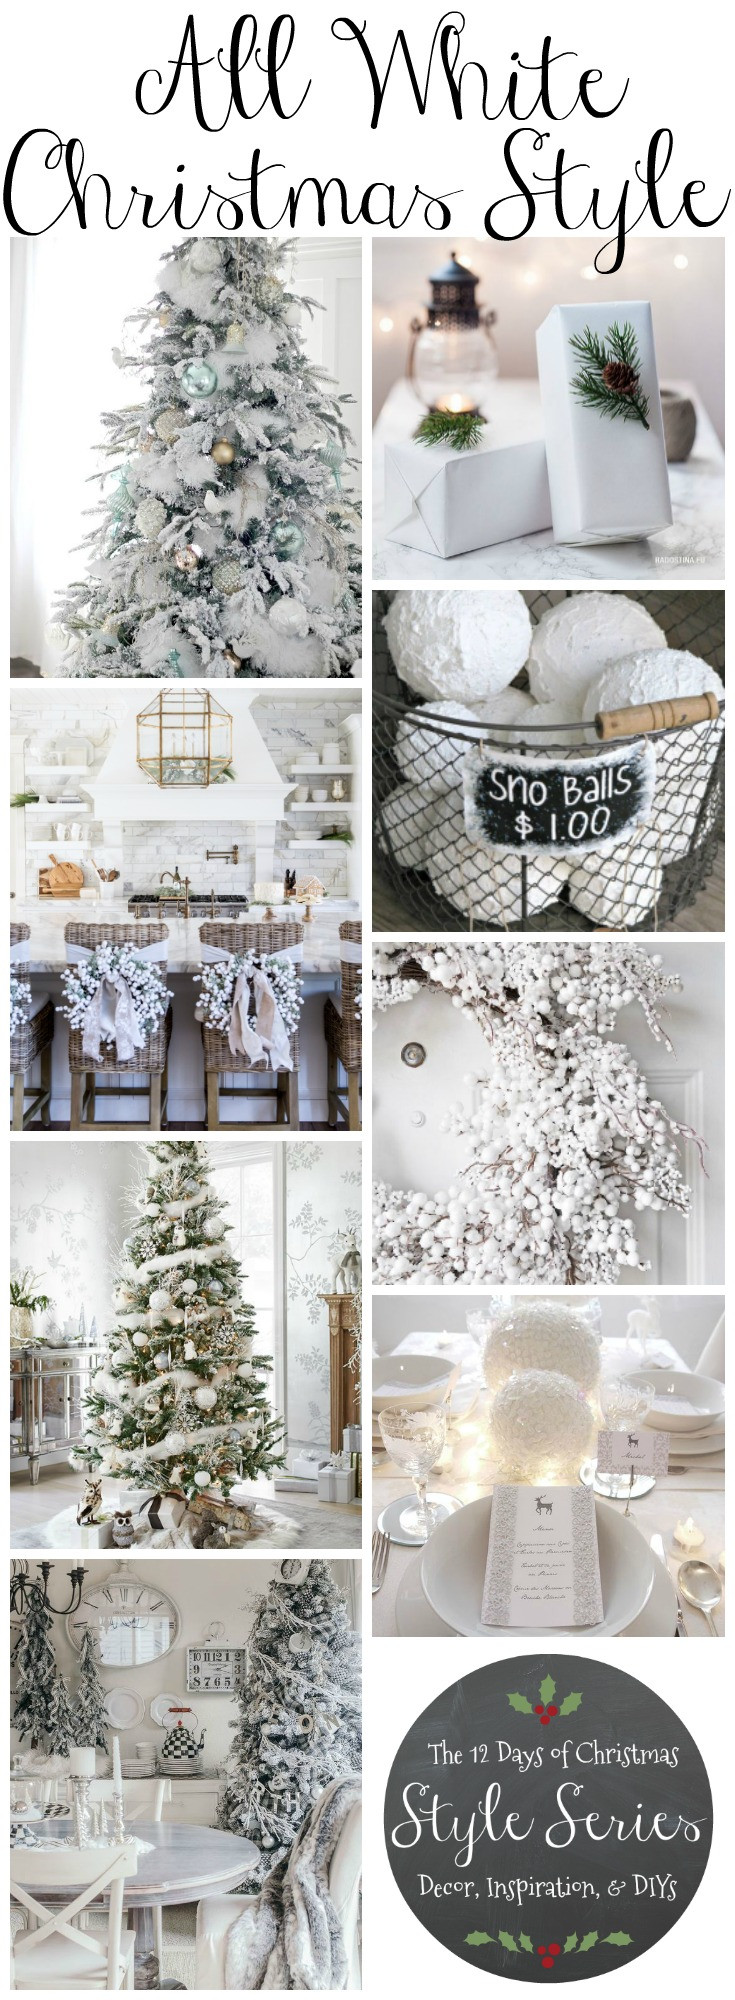 Christmas Winter Wonderland Decorating Ideas
 All White Christmas Style Series